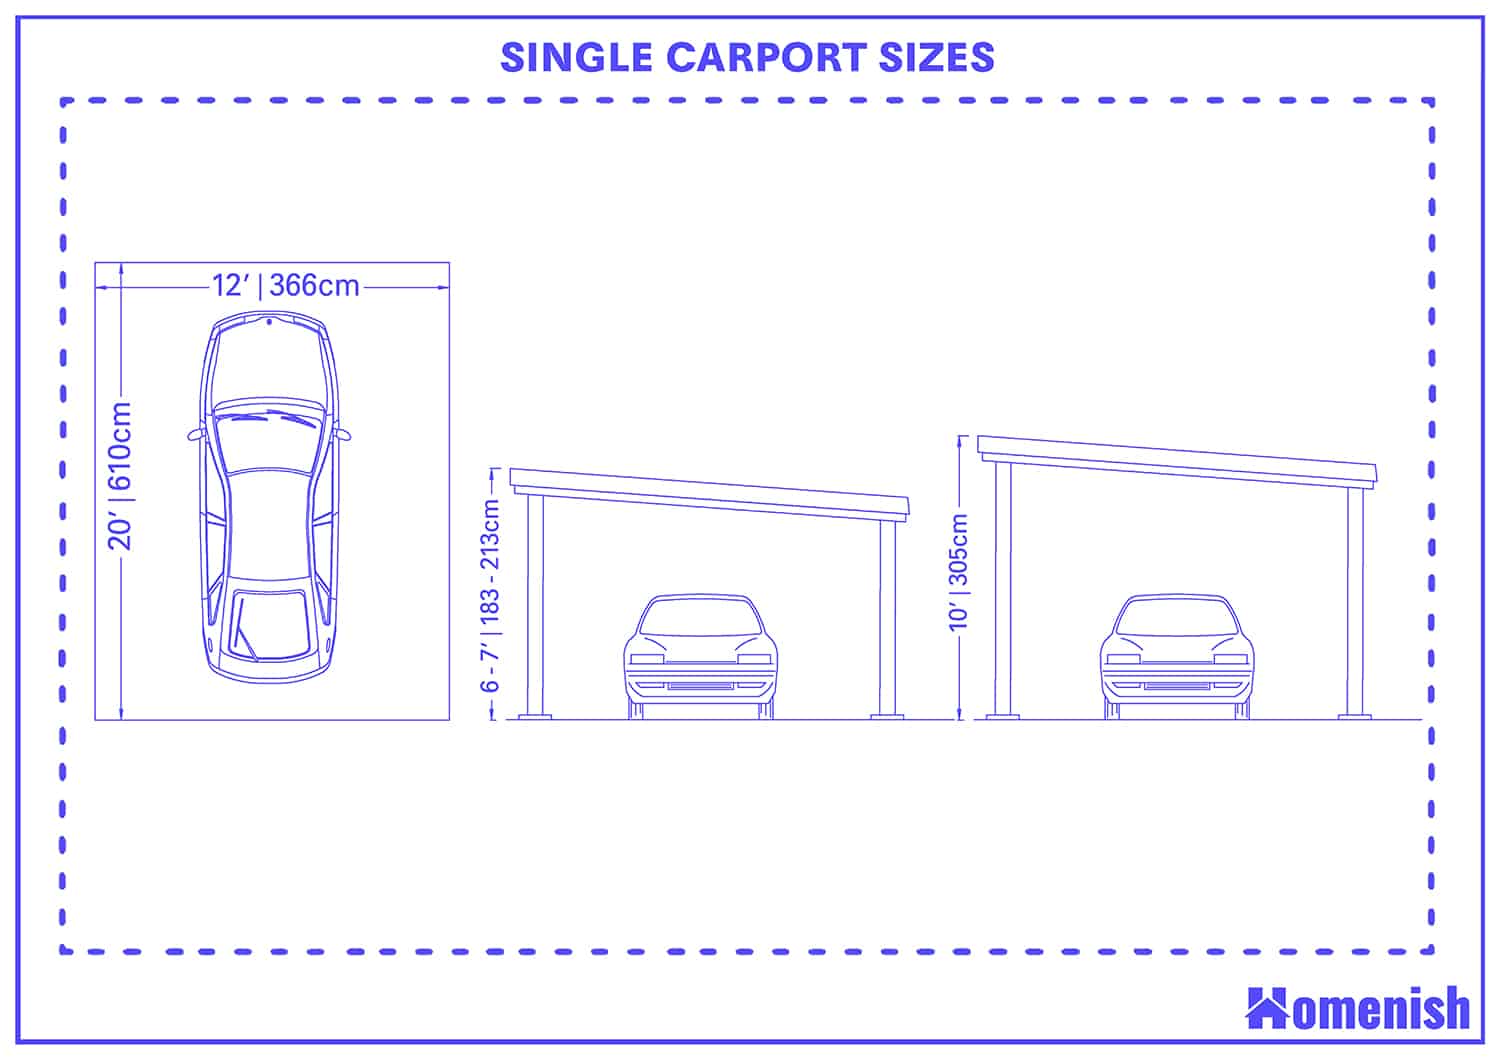 Single Carport Sizes